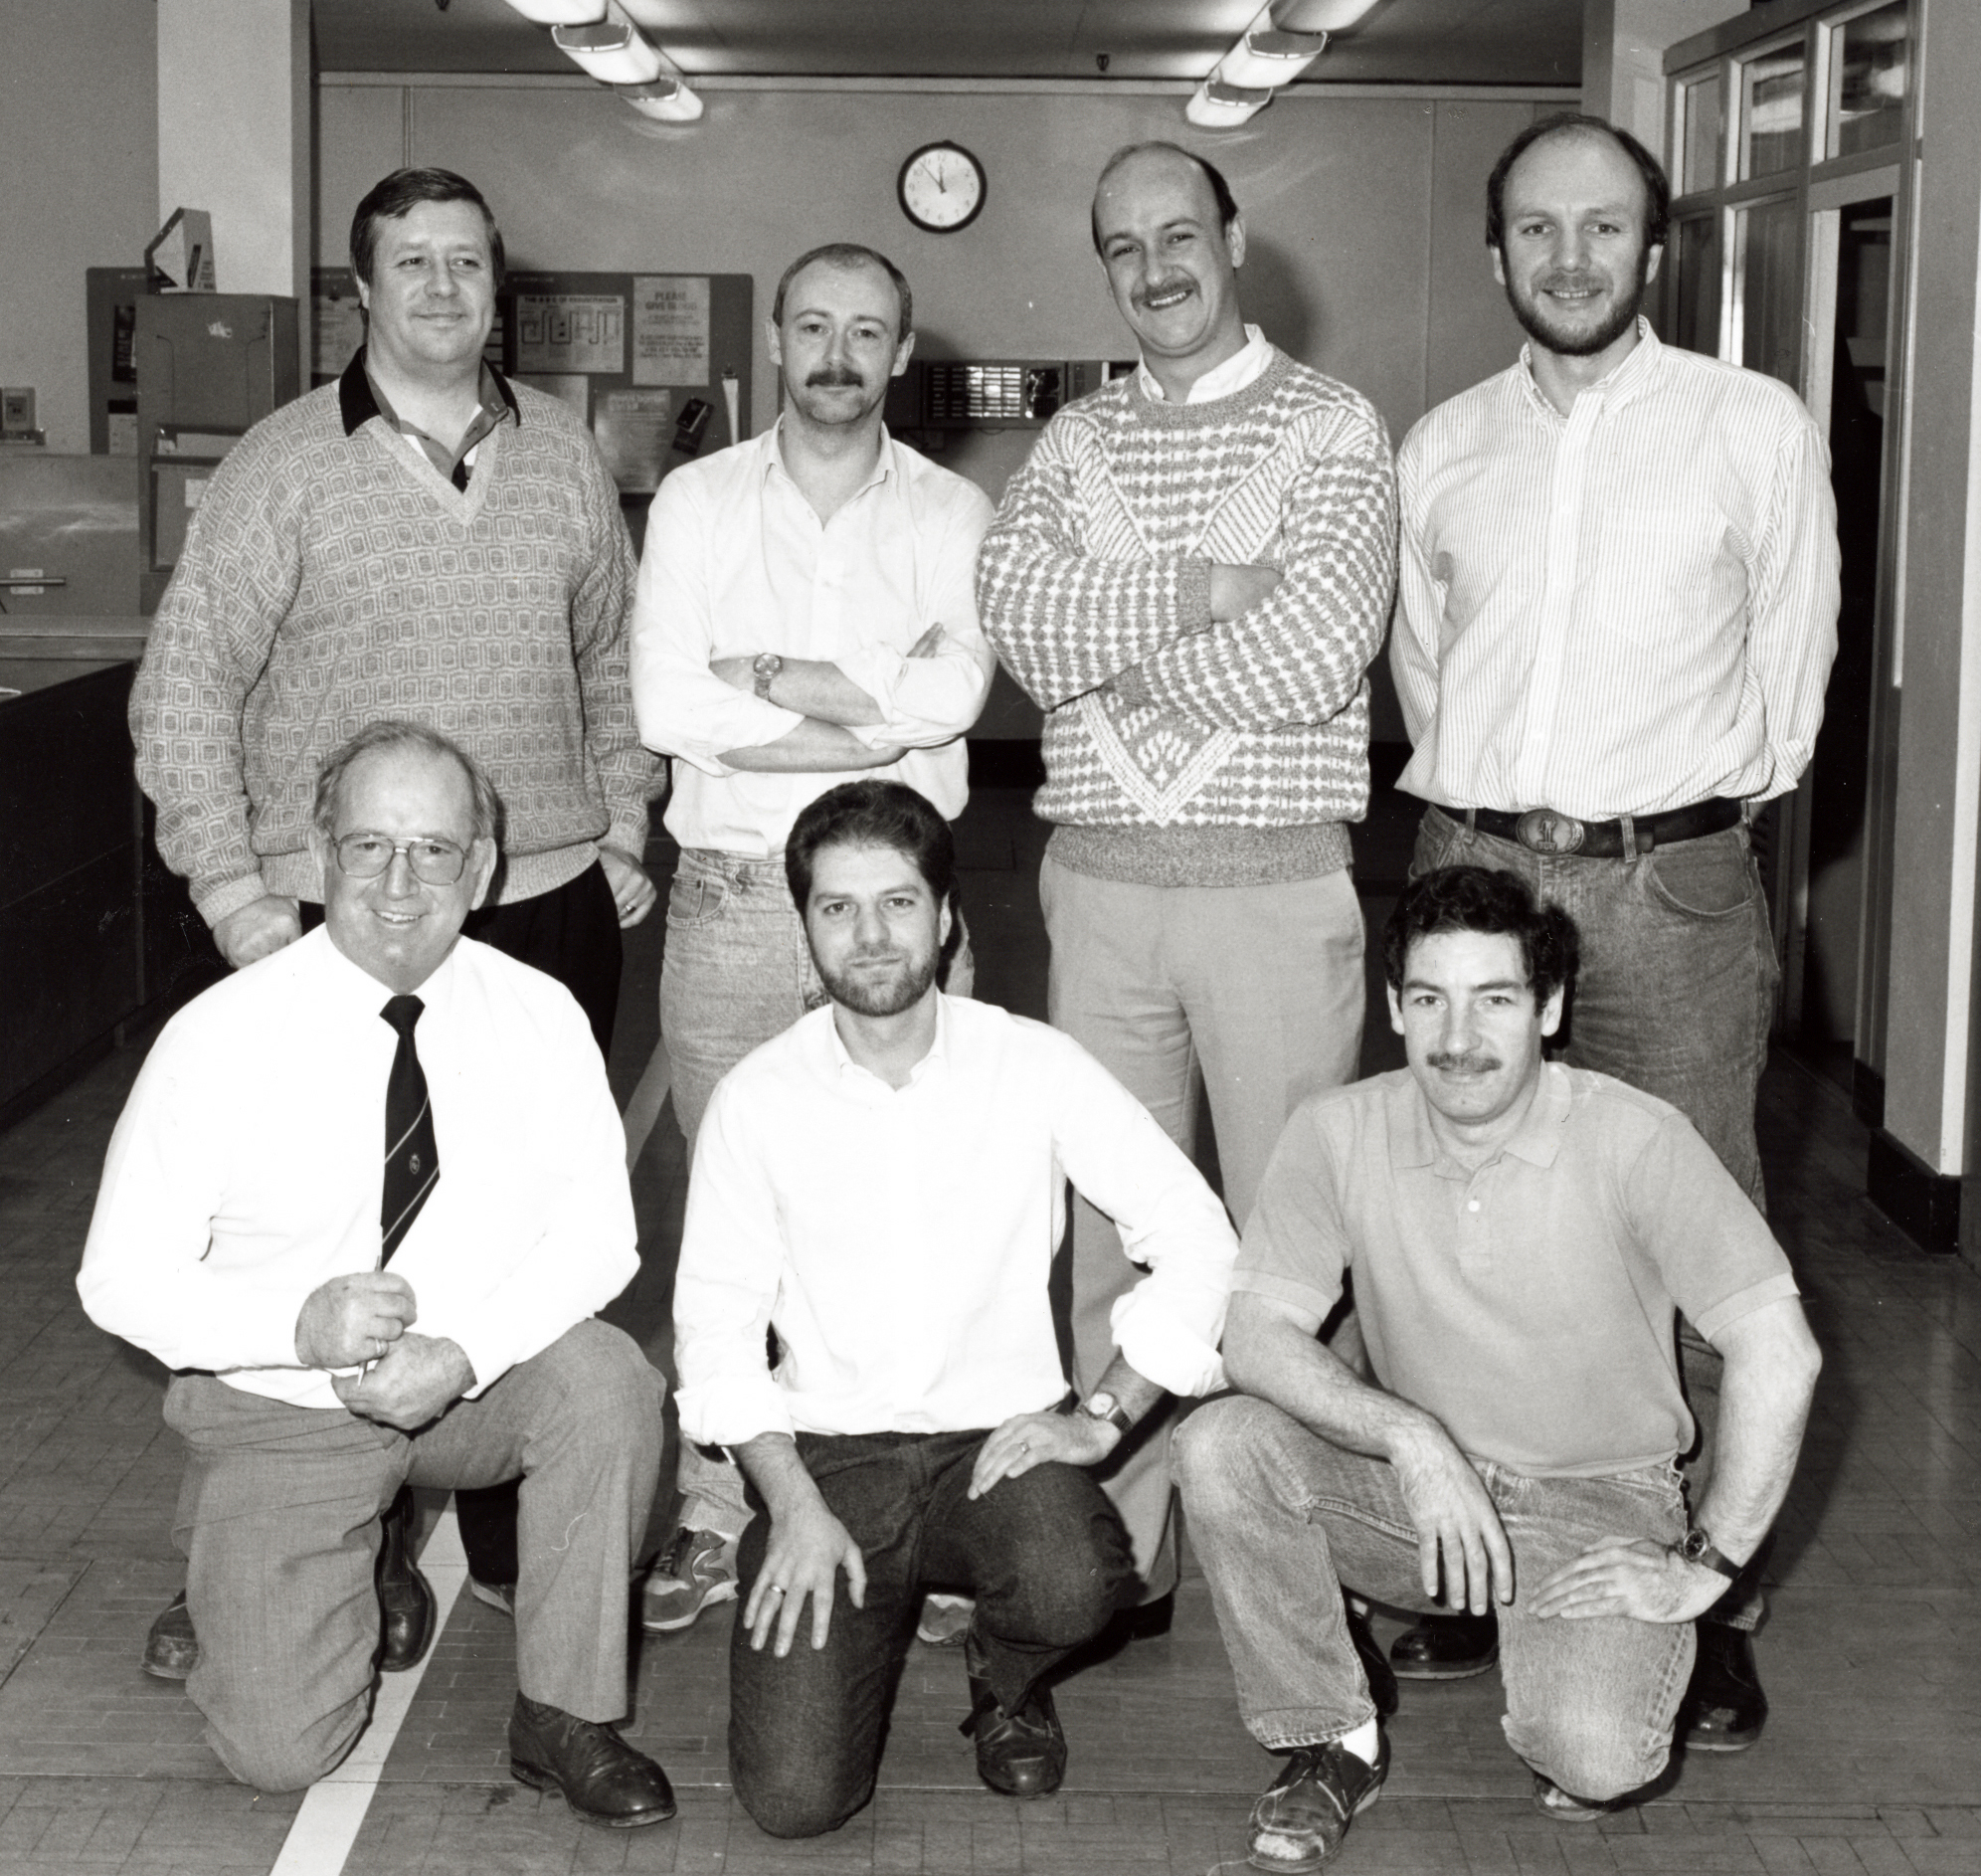 Repro staff, 1980s